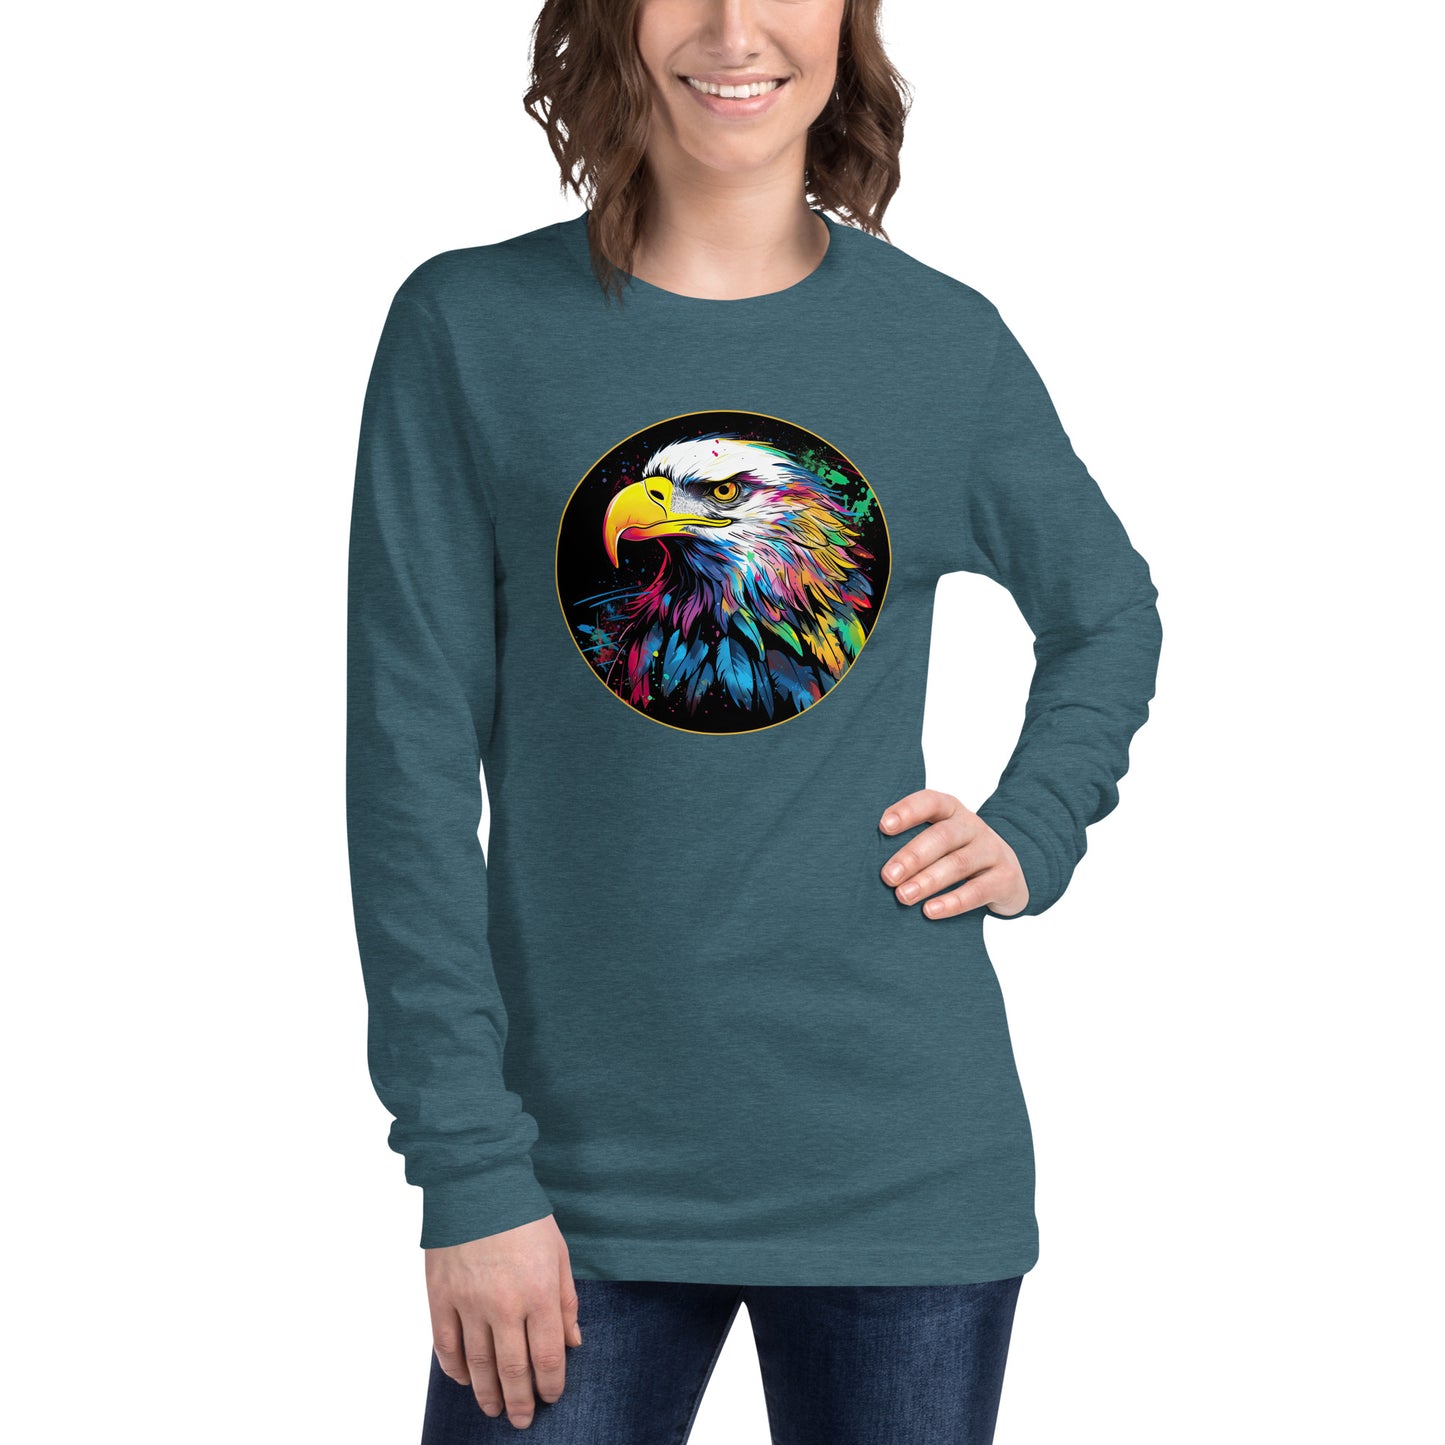 Watercolor Bald Eagle Women's T-Shirt, Long Long Sleeve